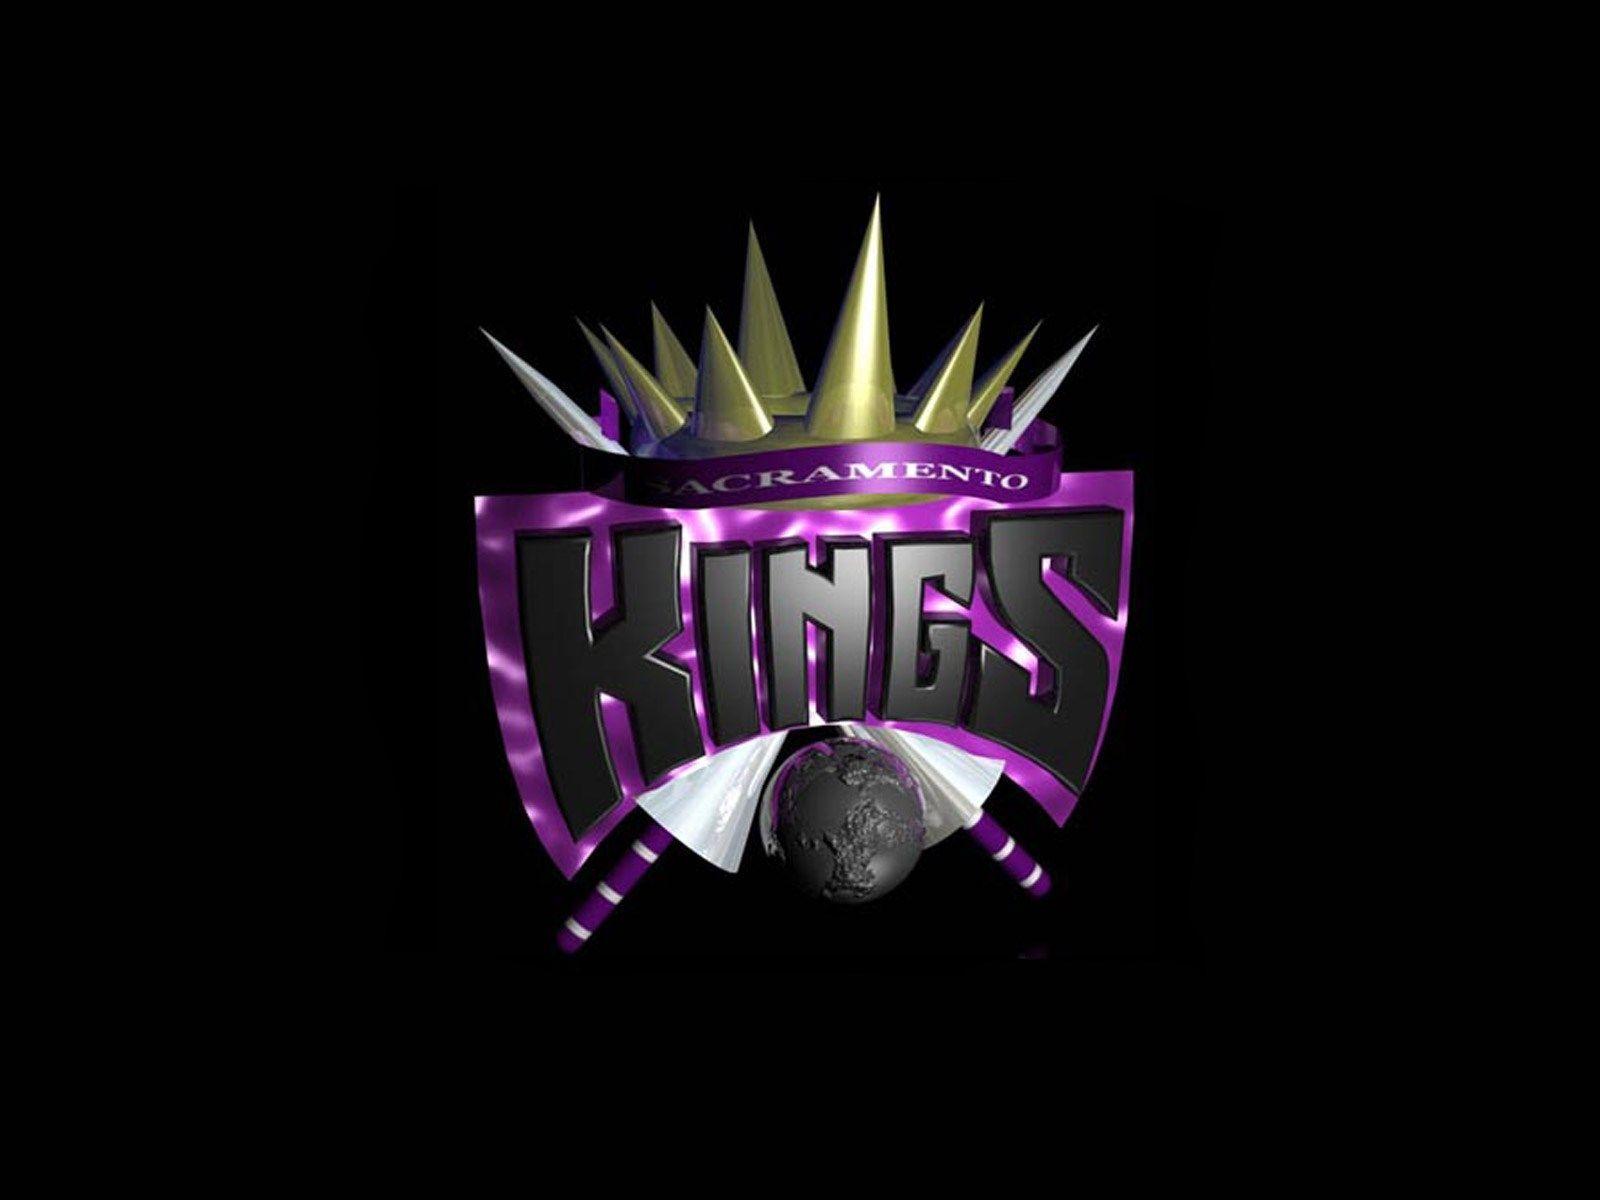 king of kings logo wallpaper